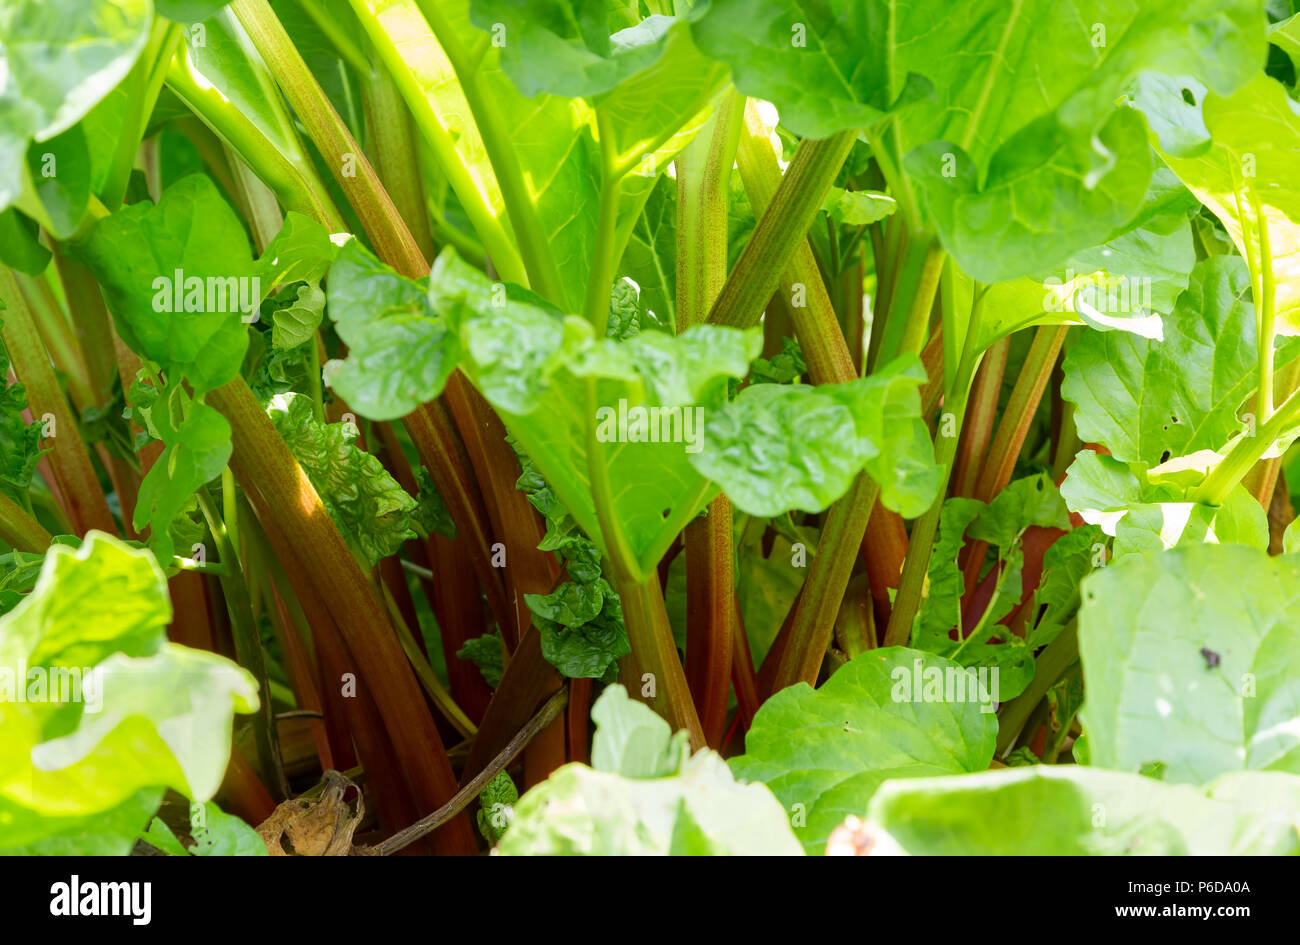 Close up image of rhubarb stems Stock Photo